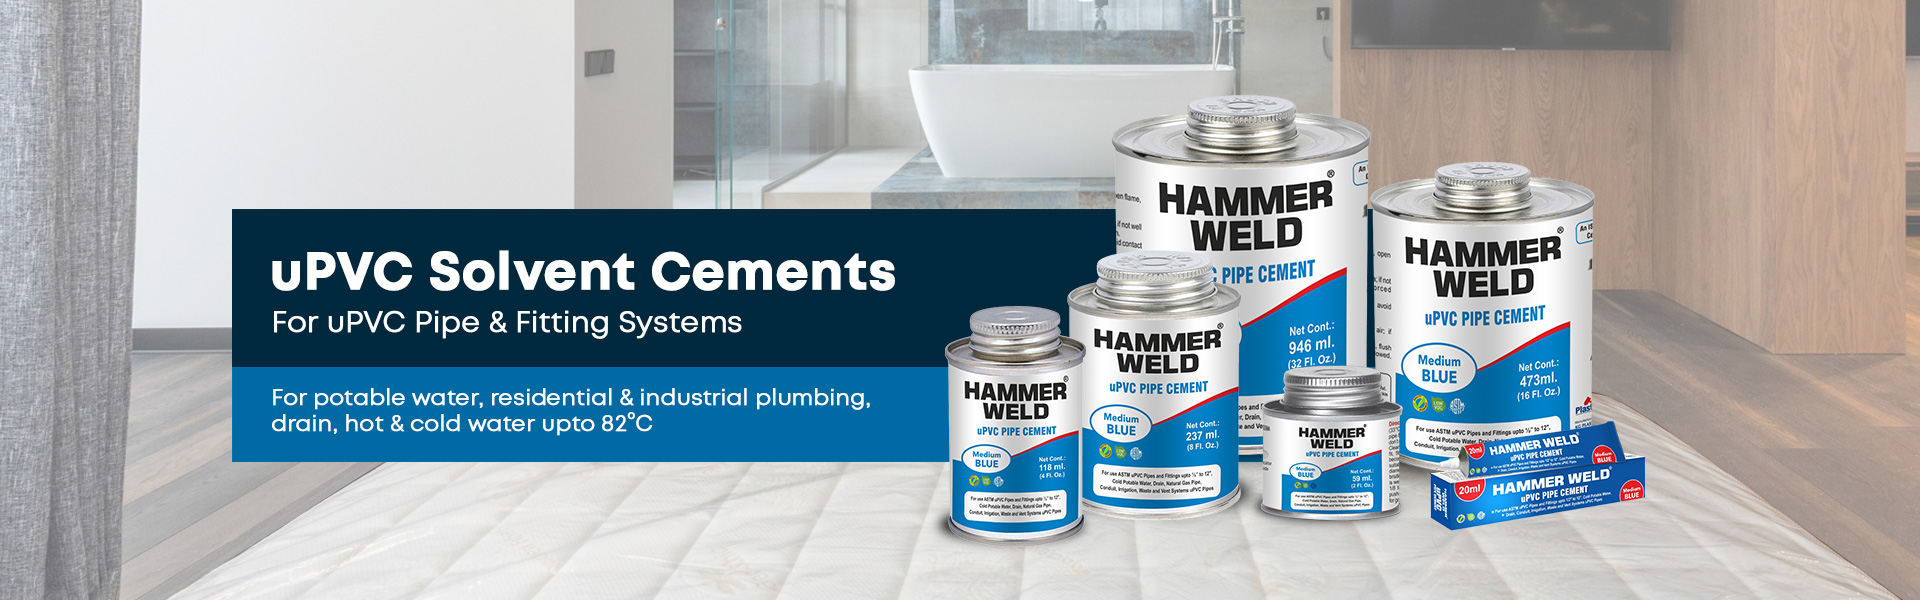 HammerWeld upvc solvent cement